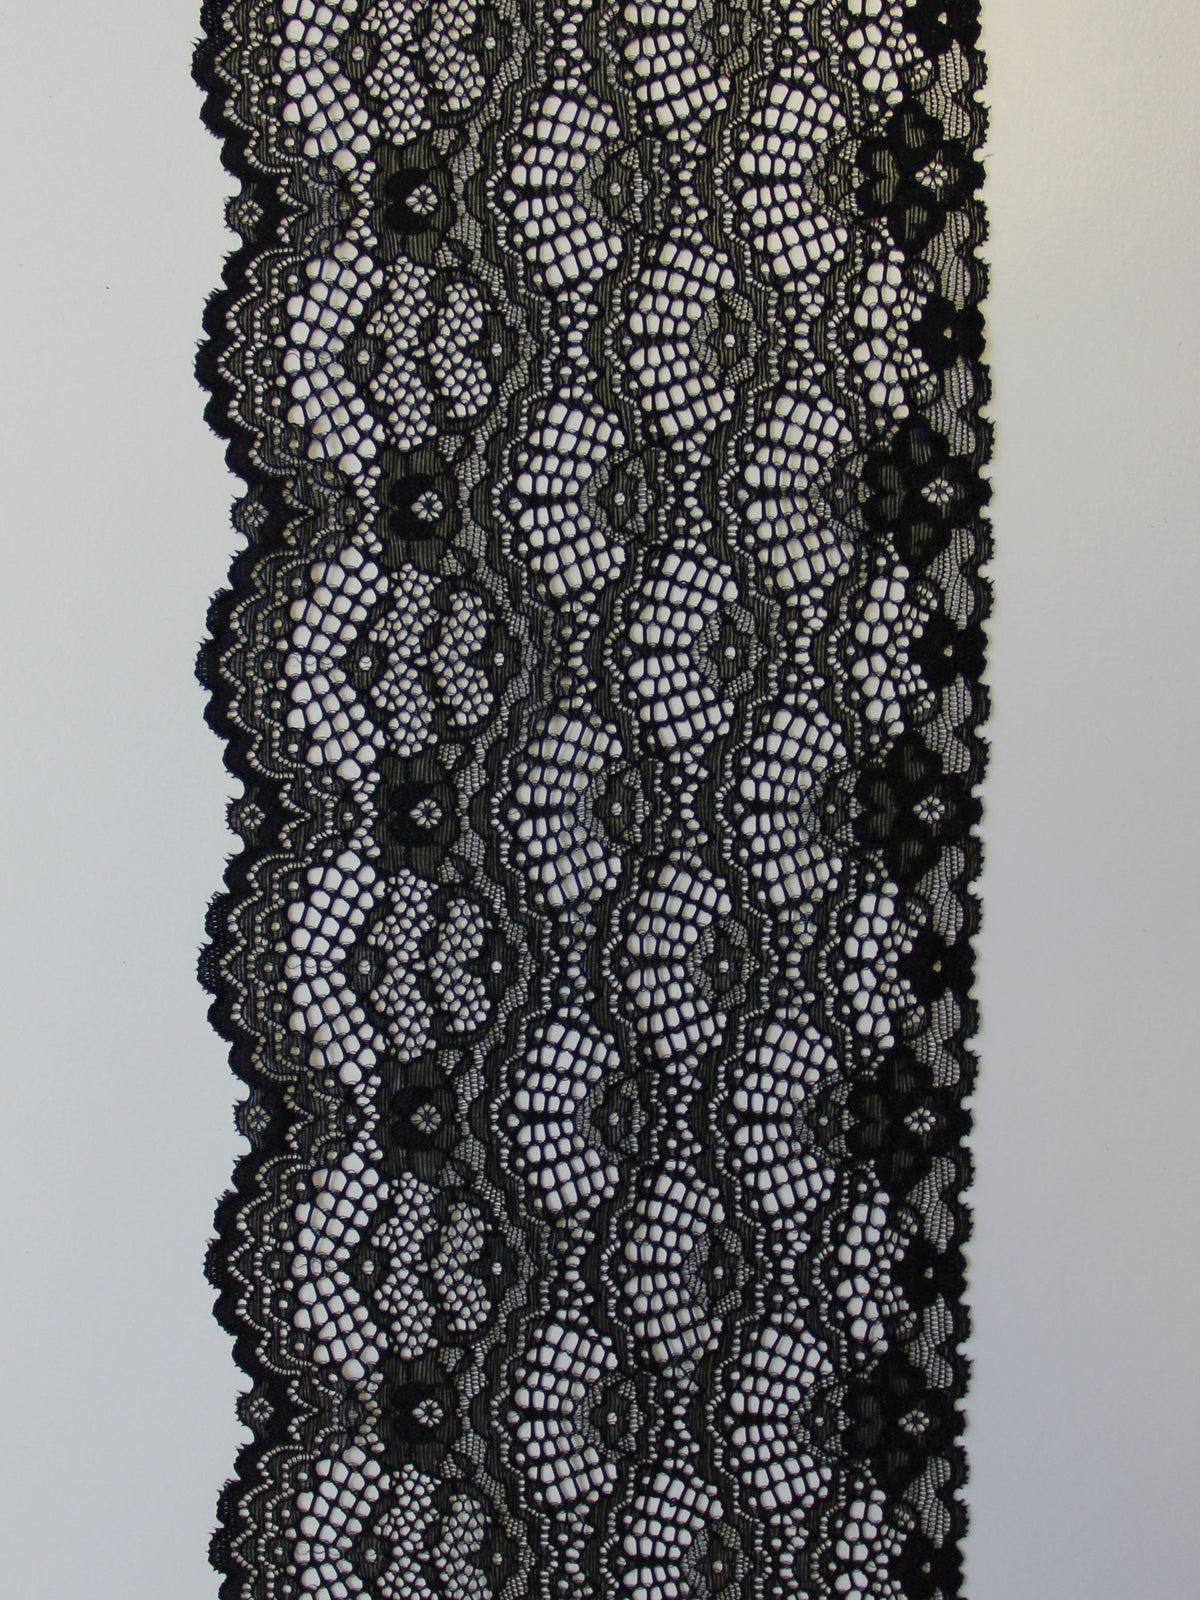 Black Lace Trim, Vintage Black Embroidery Lace Fabric Trim, Lingerie, Black  Dresses, Costumes, by 3 Yards -  Finland